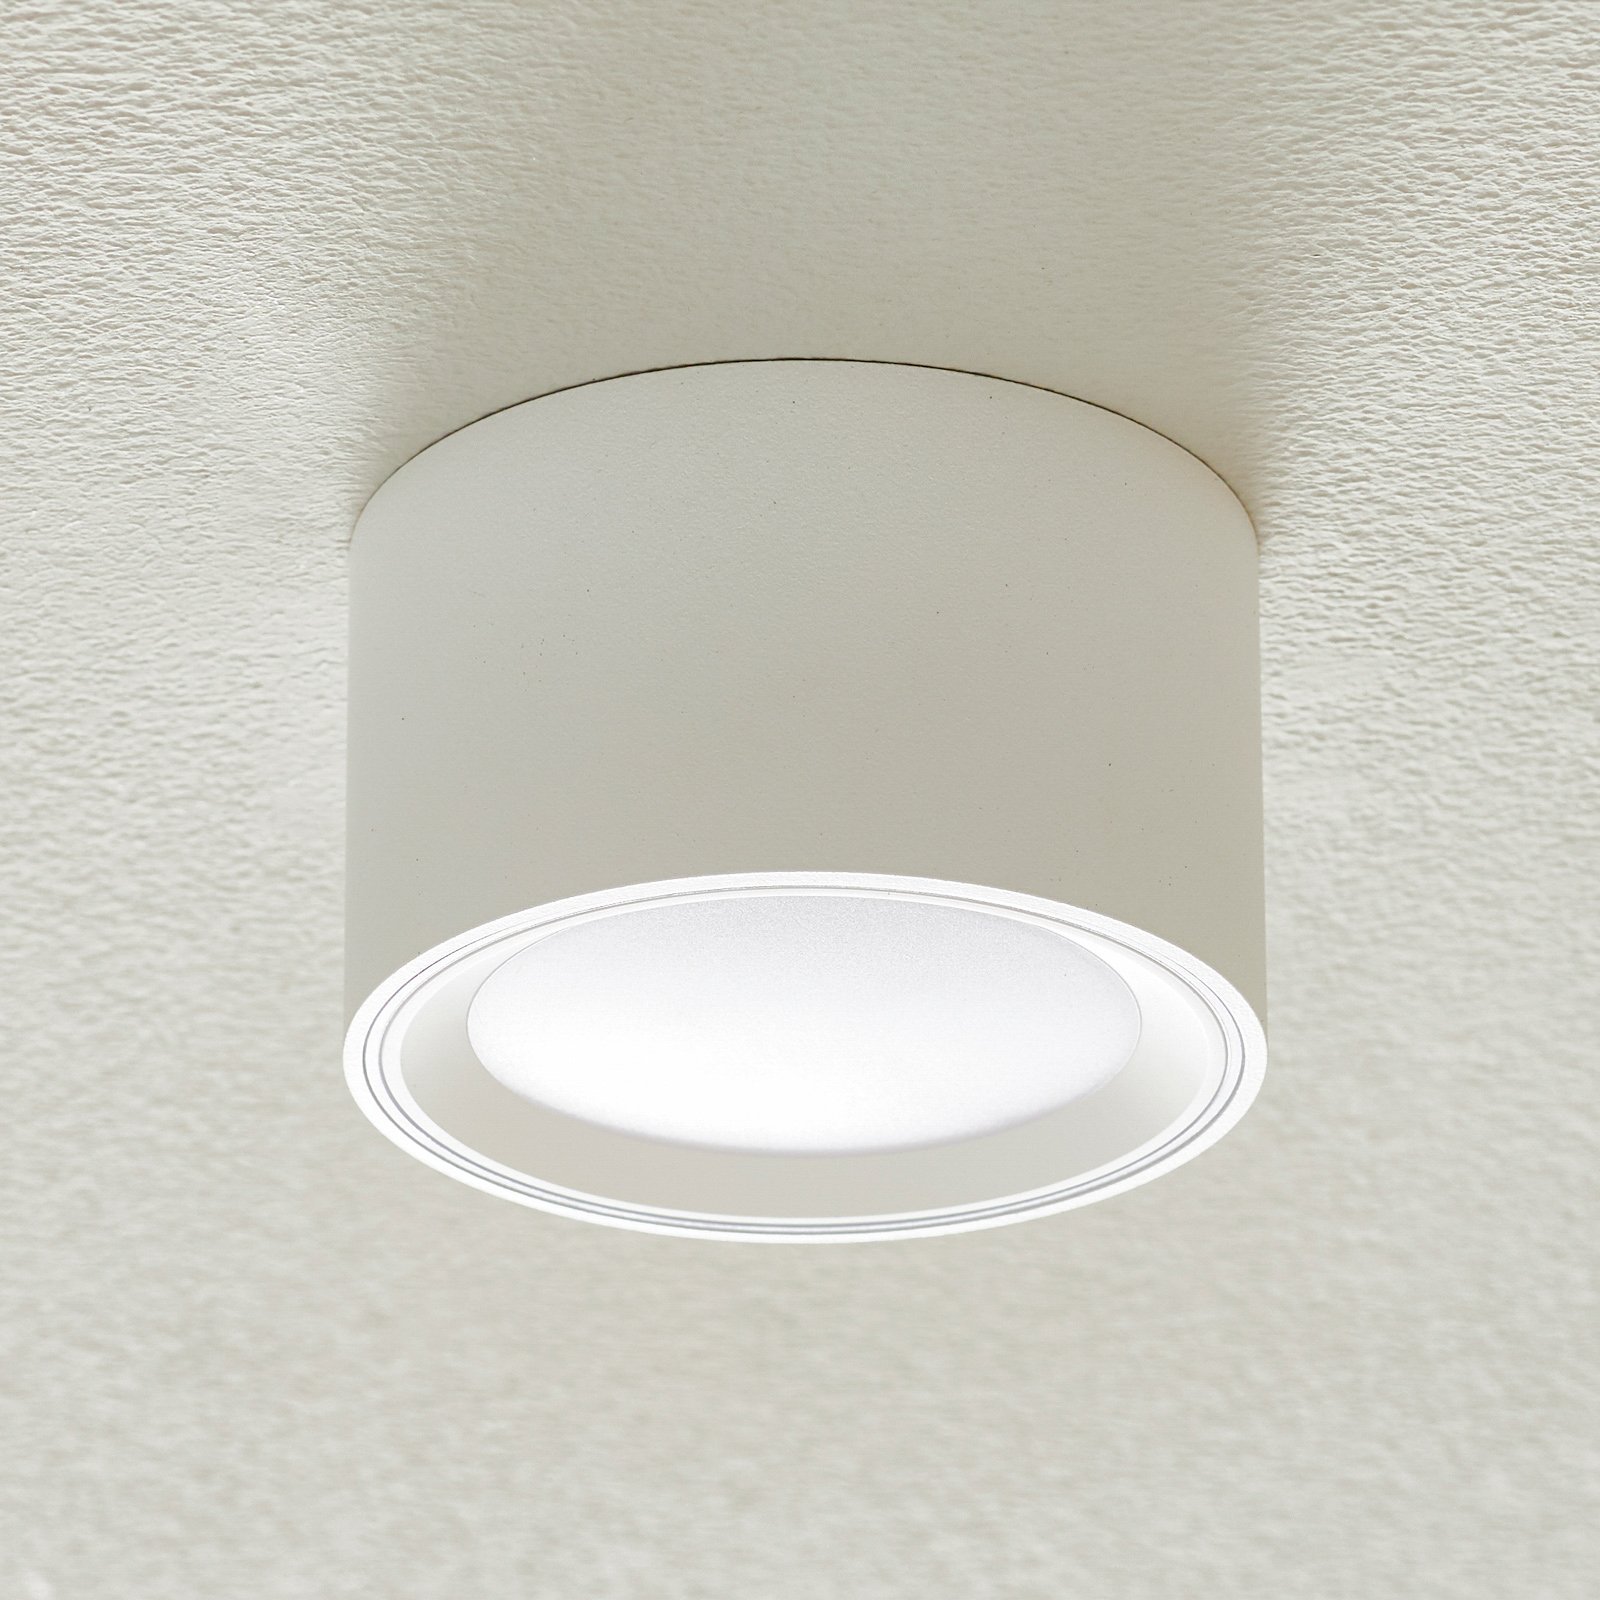 LED plafondlamp Fallon, hoogte 6 cm